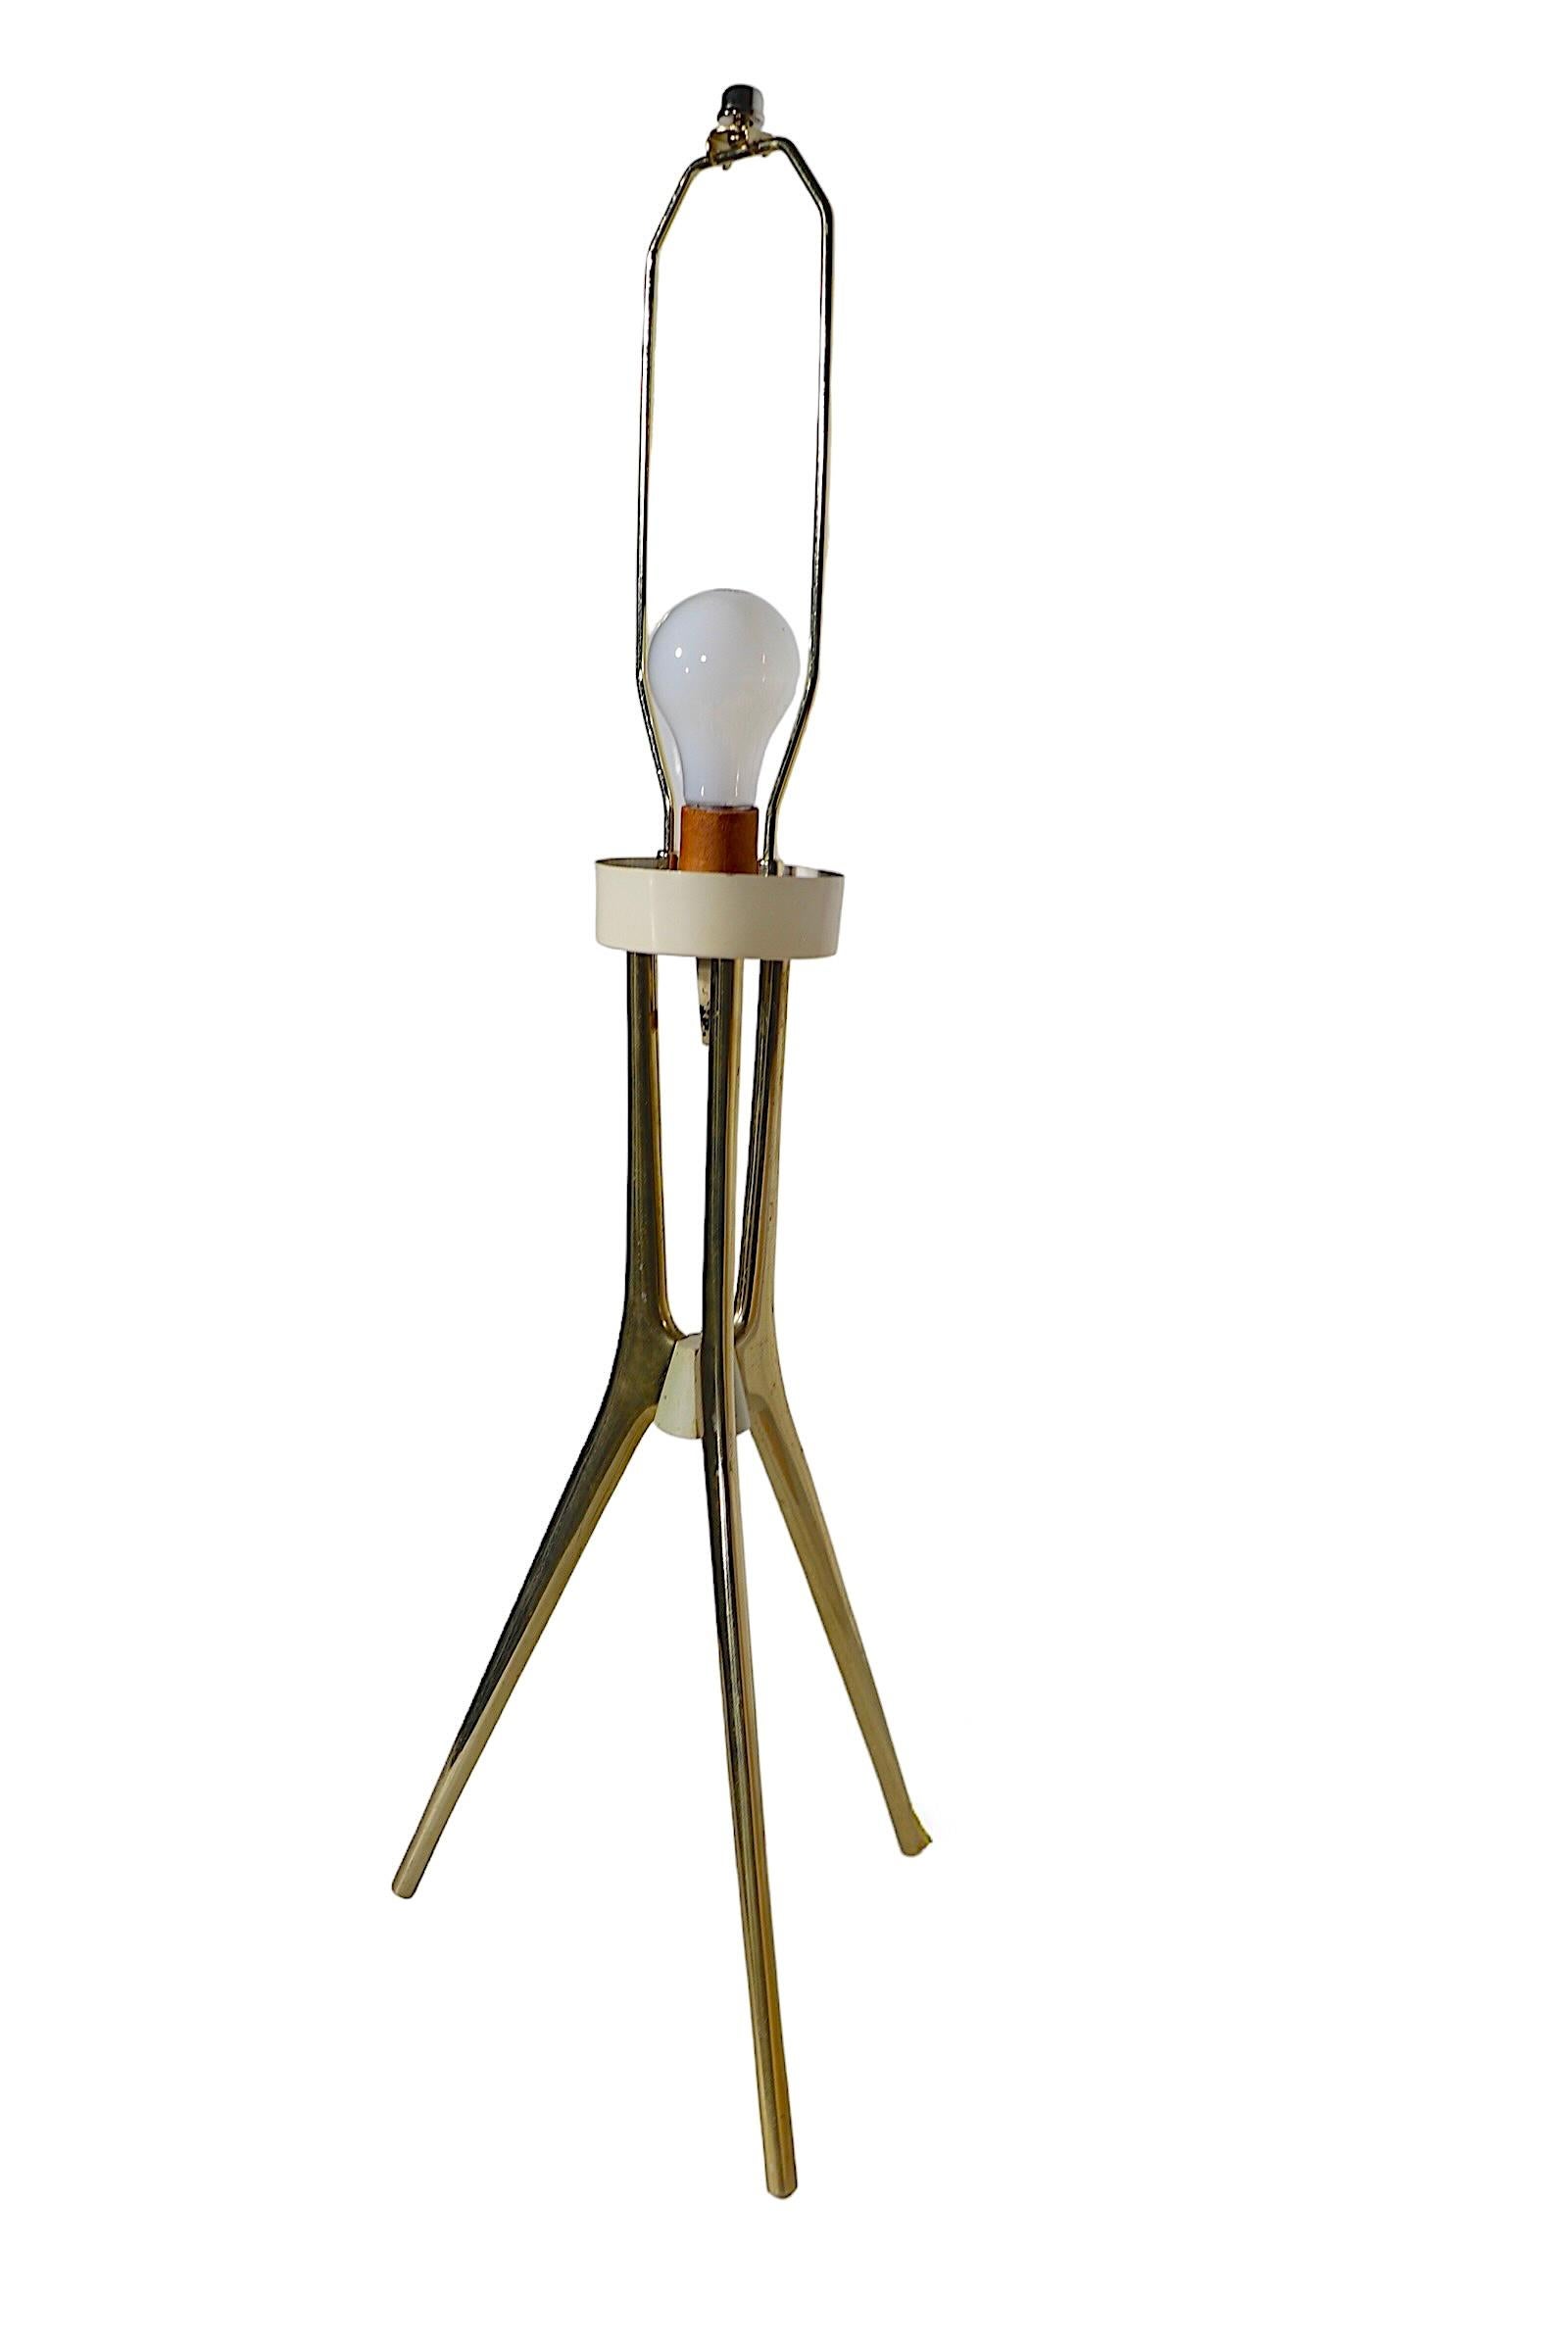 Atomic Mid Century Table Lamp by Lightolier att. to Thurston c. 1950/ 60's For Sale 6